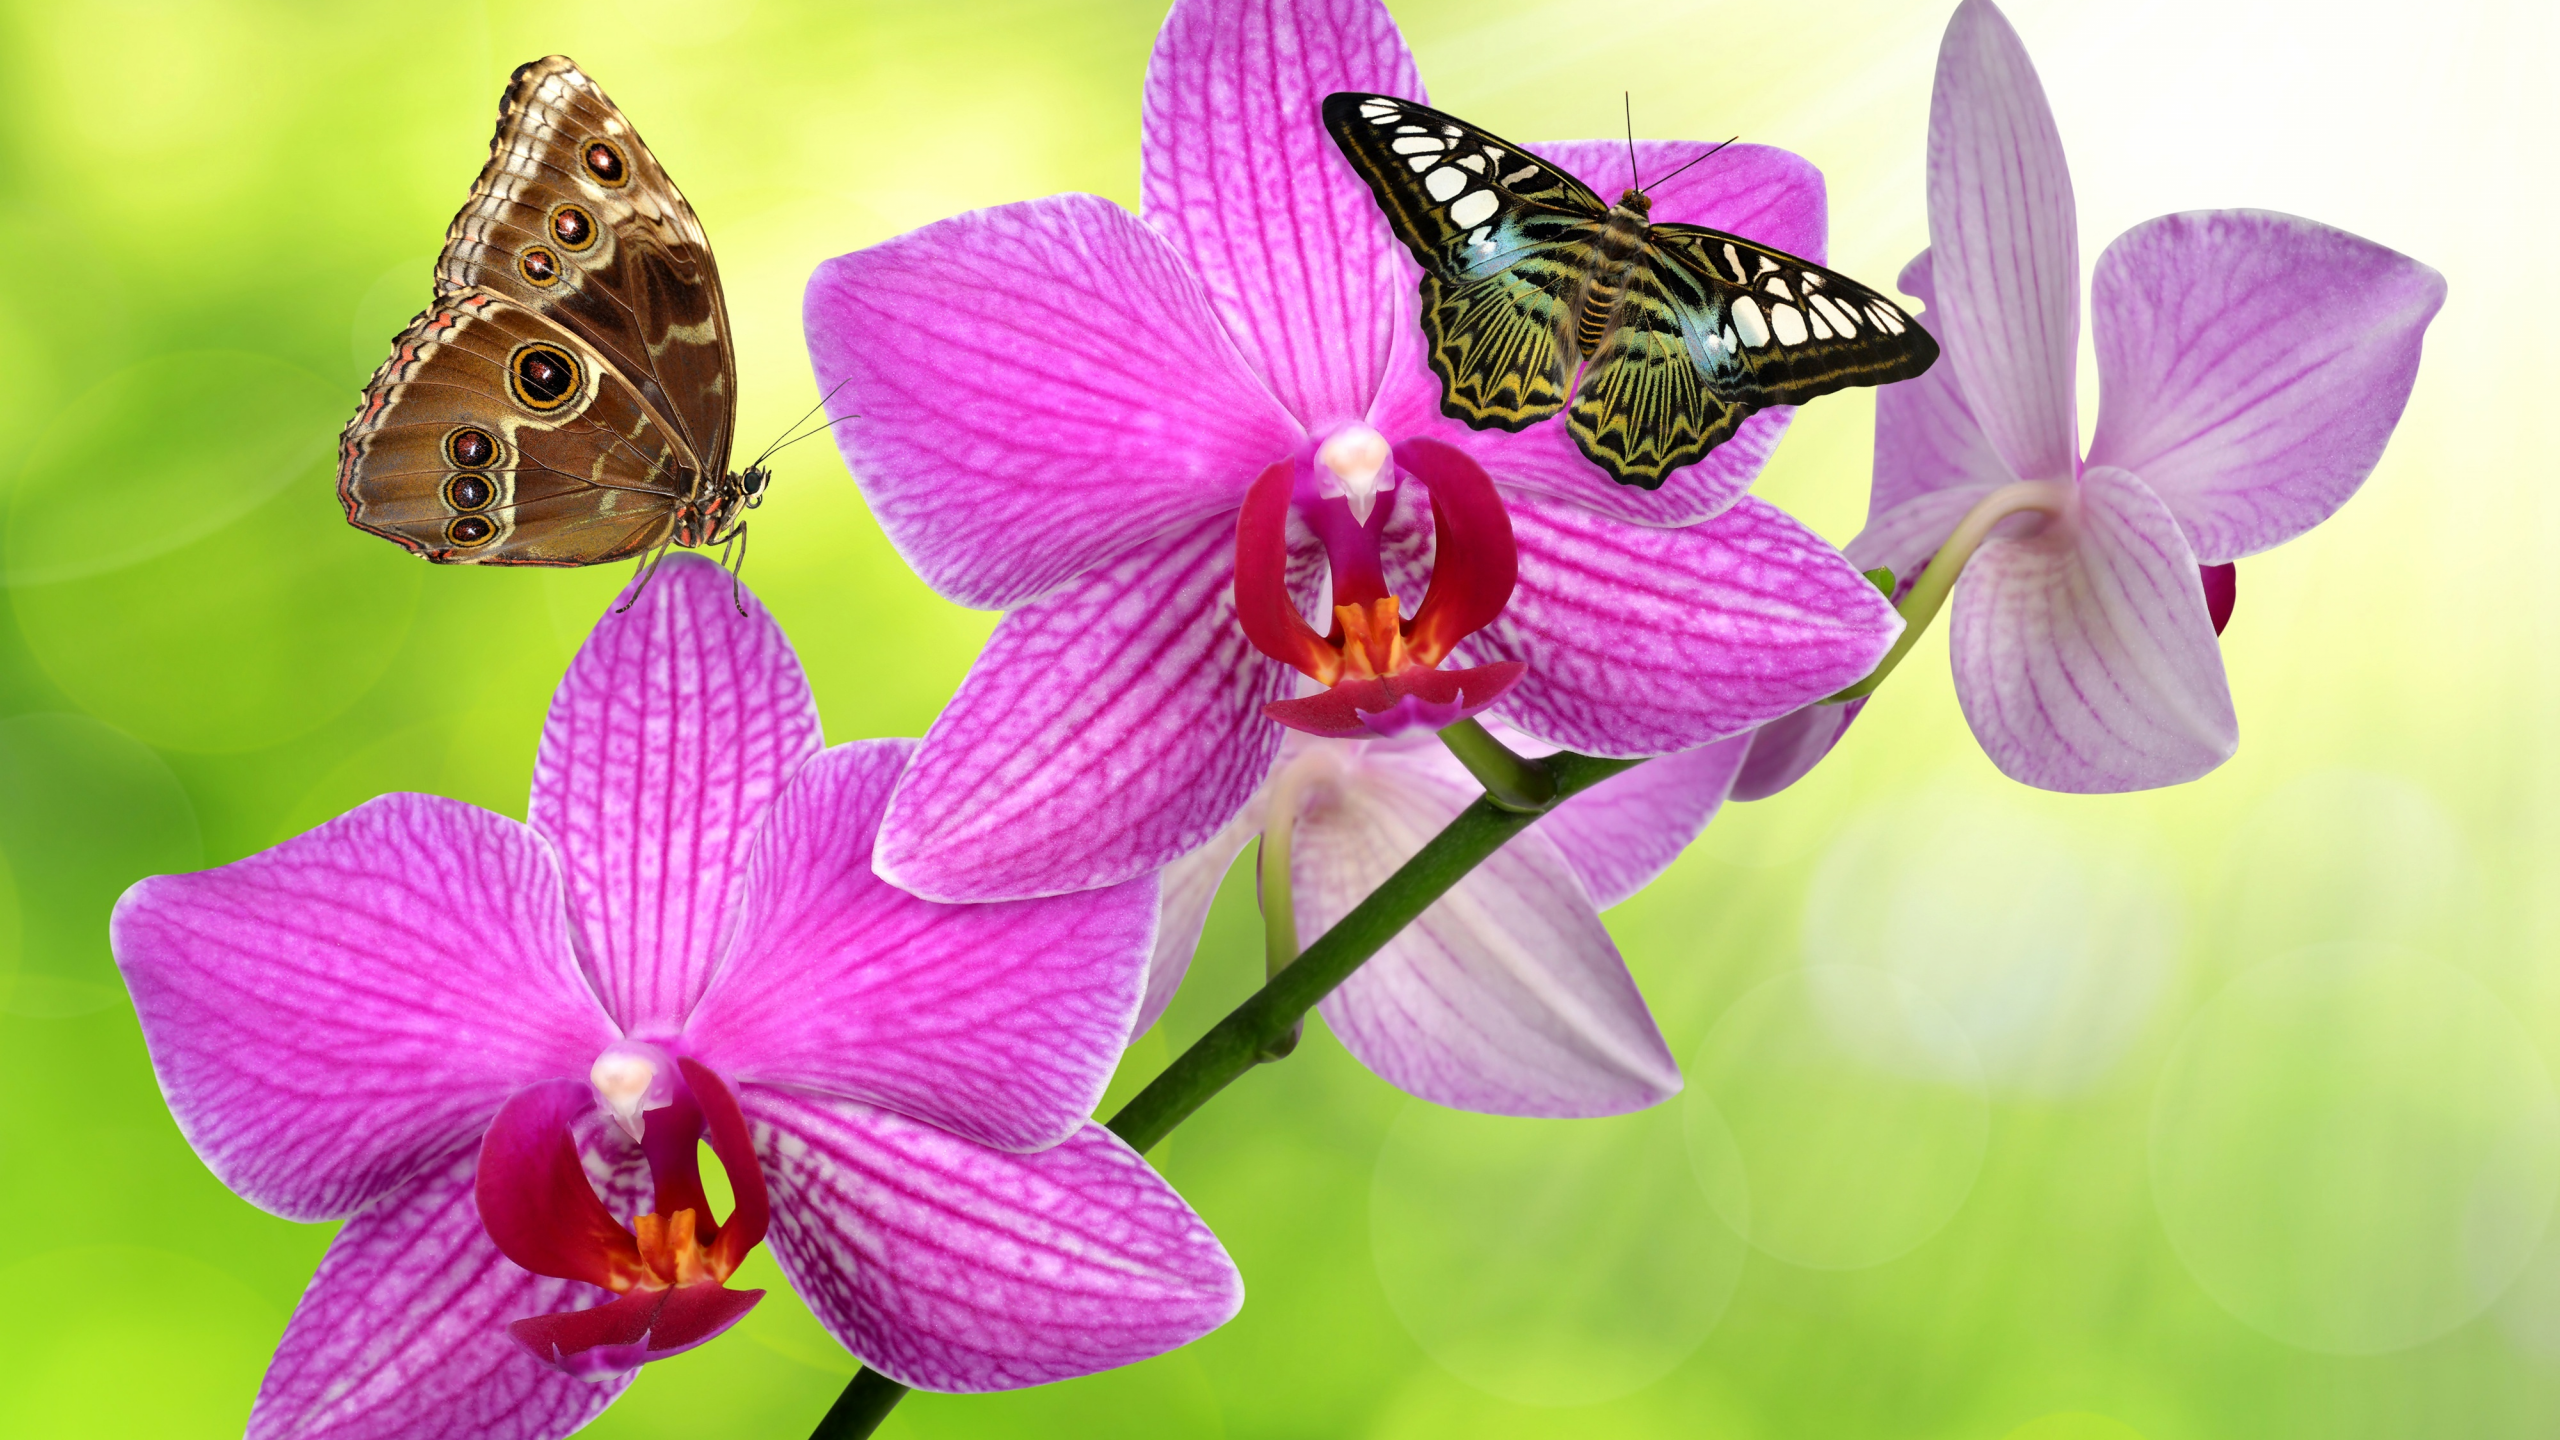 орхидеи, бабачки, блики, стебель, фон, зелень, цветки